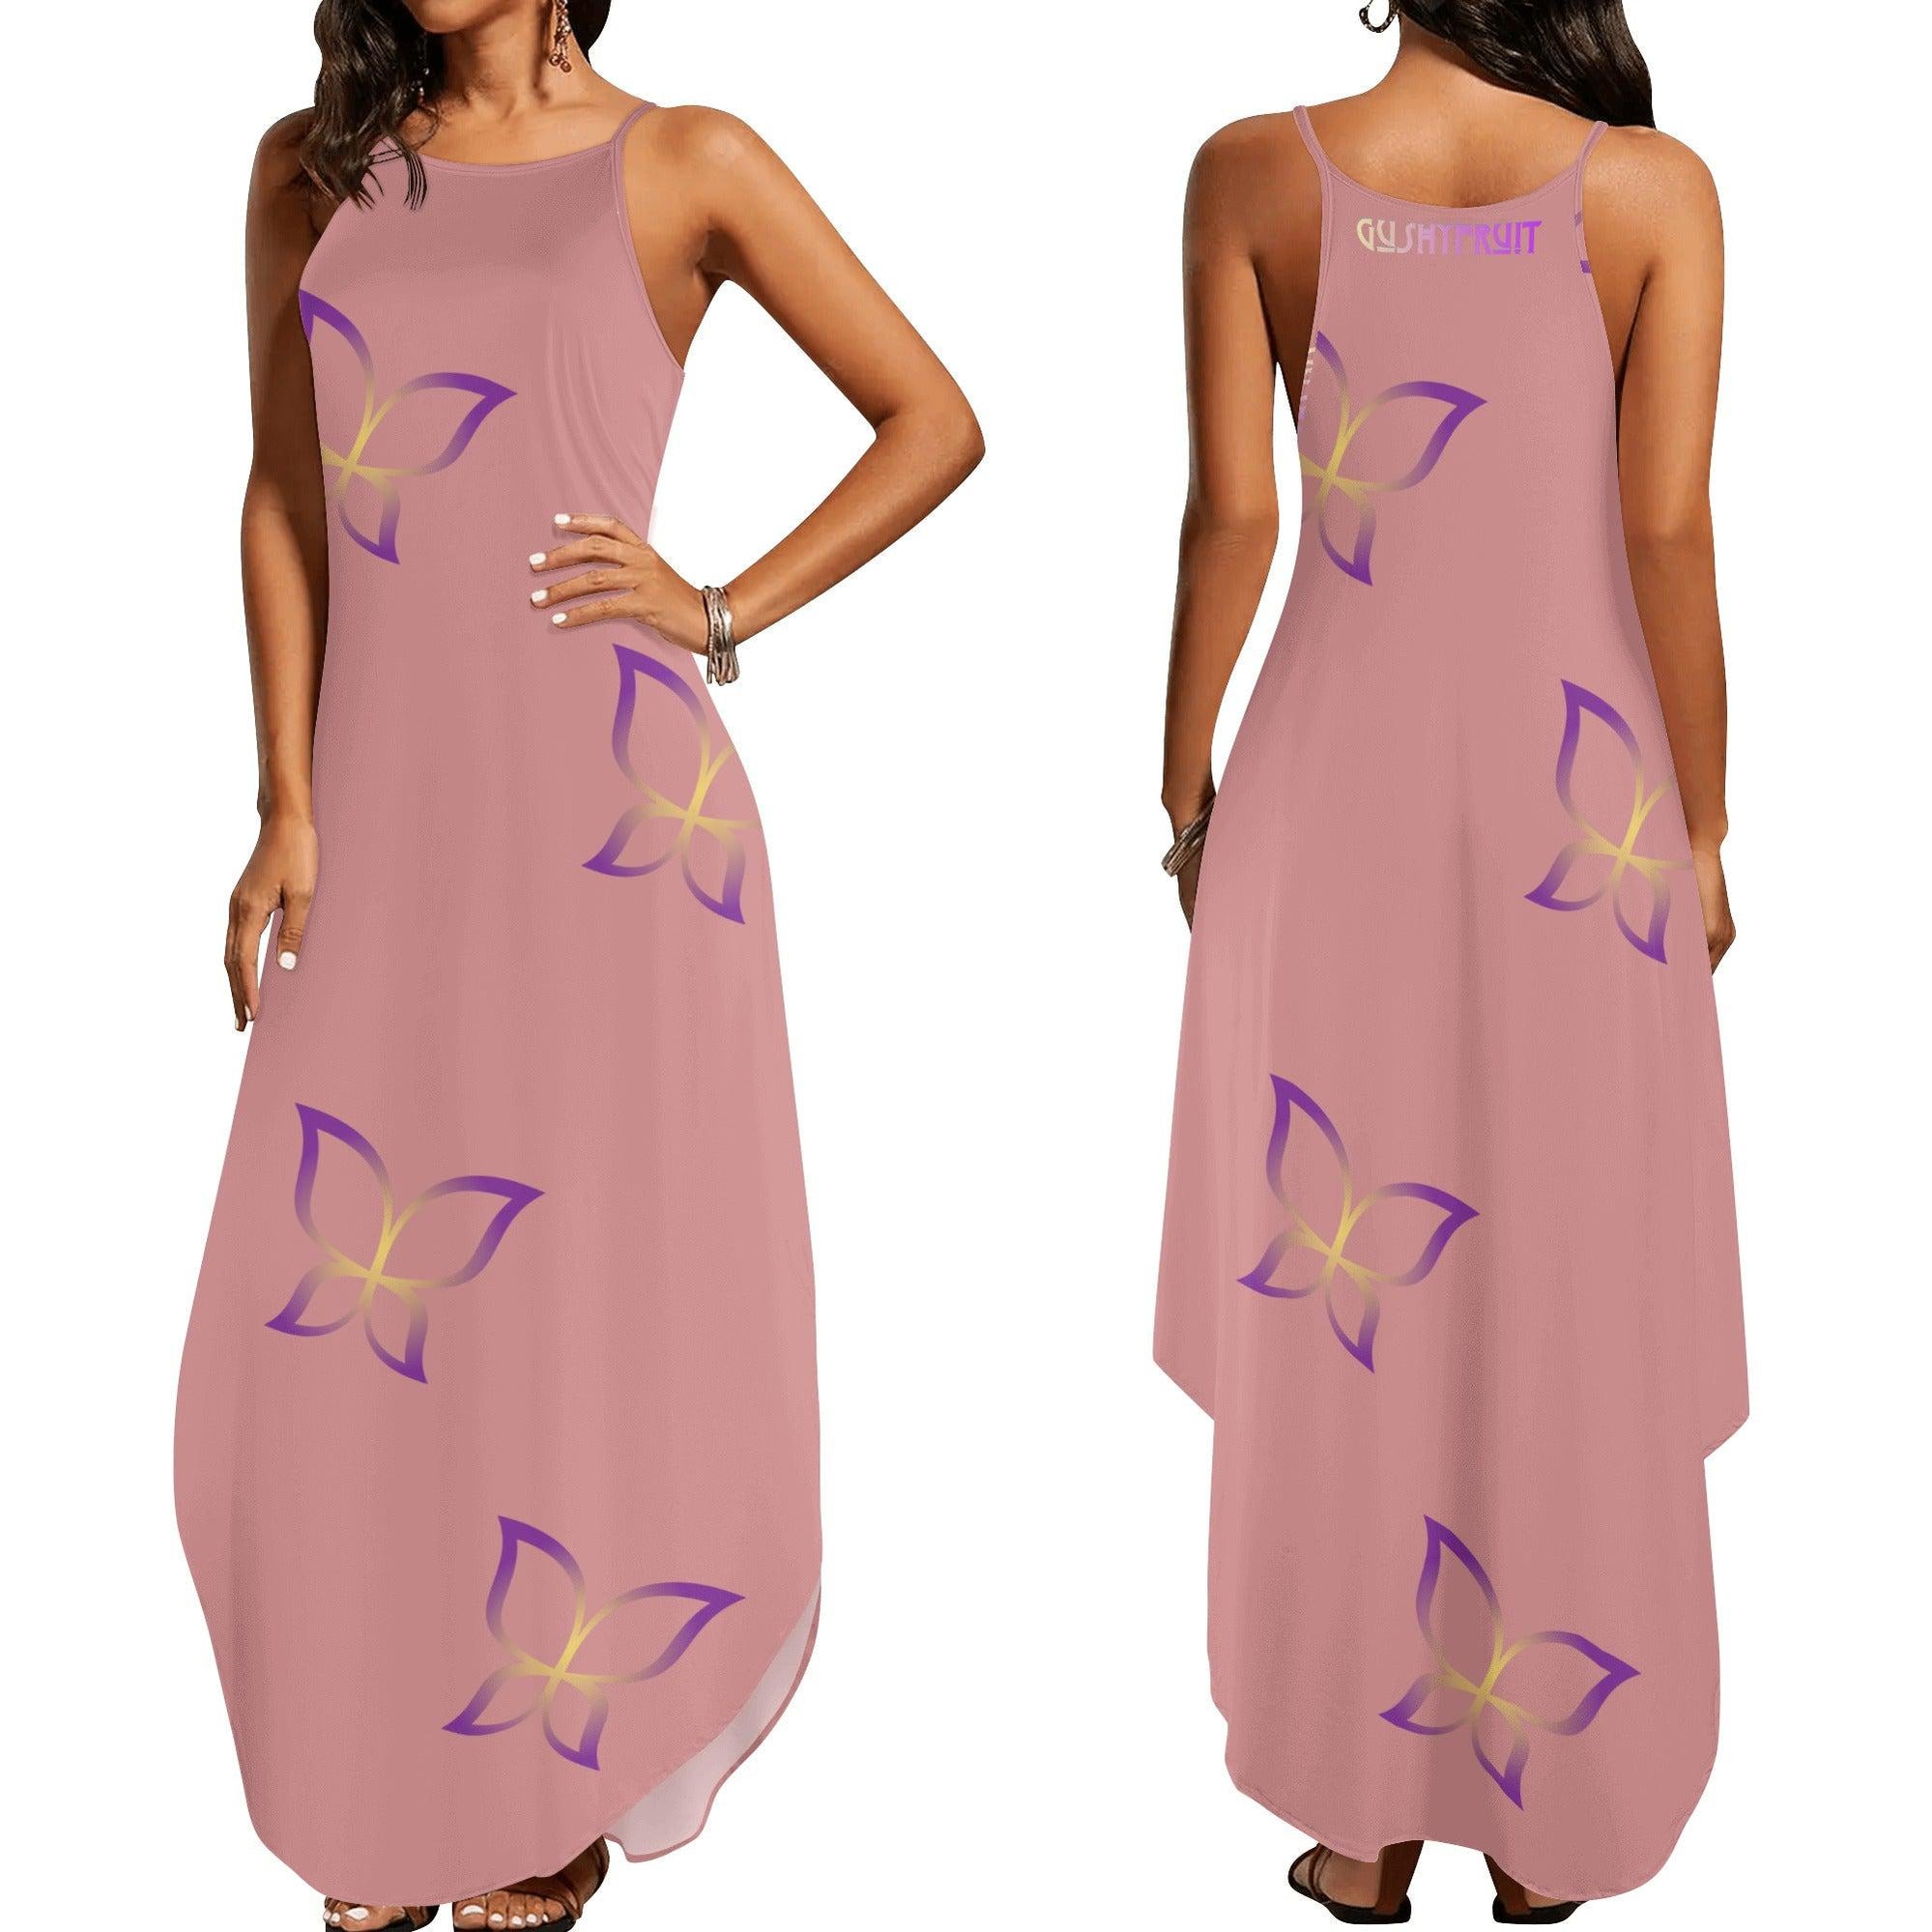 GushyFruit Sleeveless TurnUp Dress - Kanivee Customs